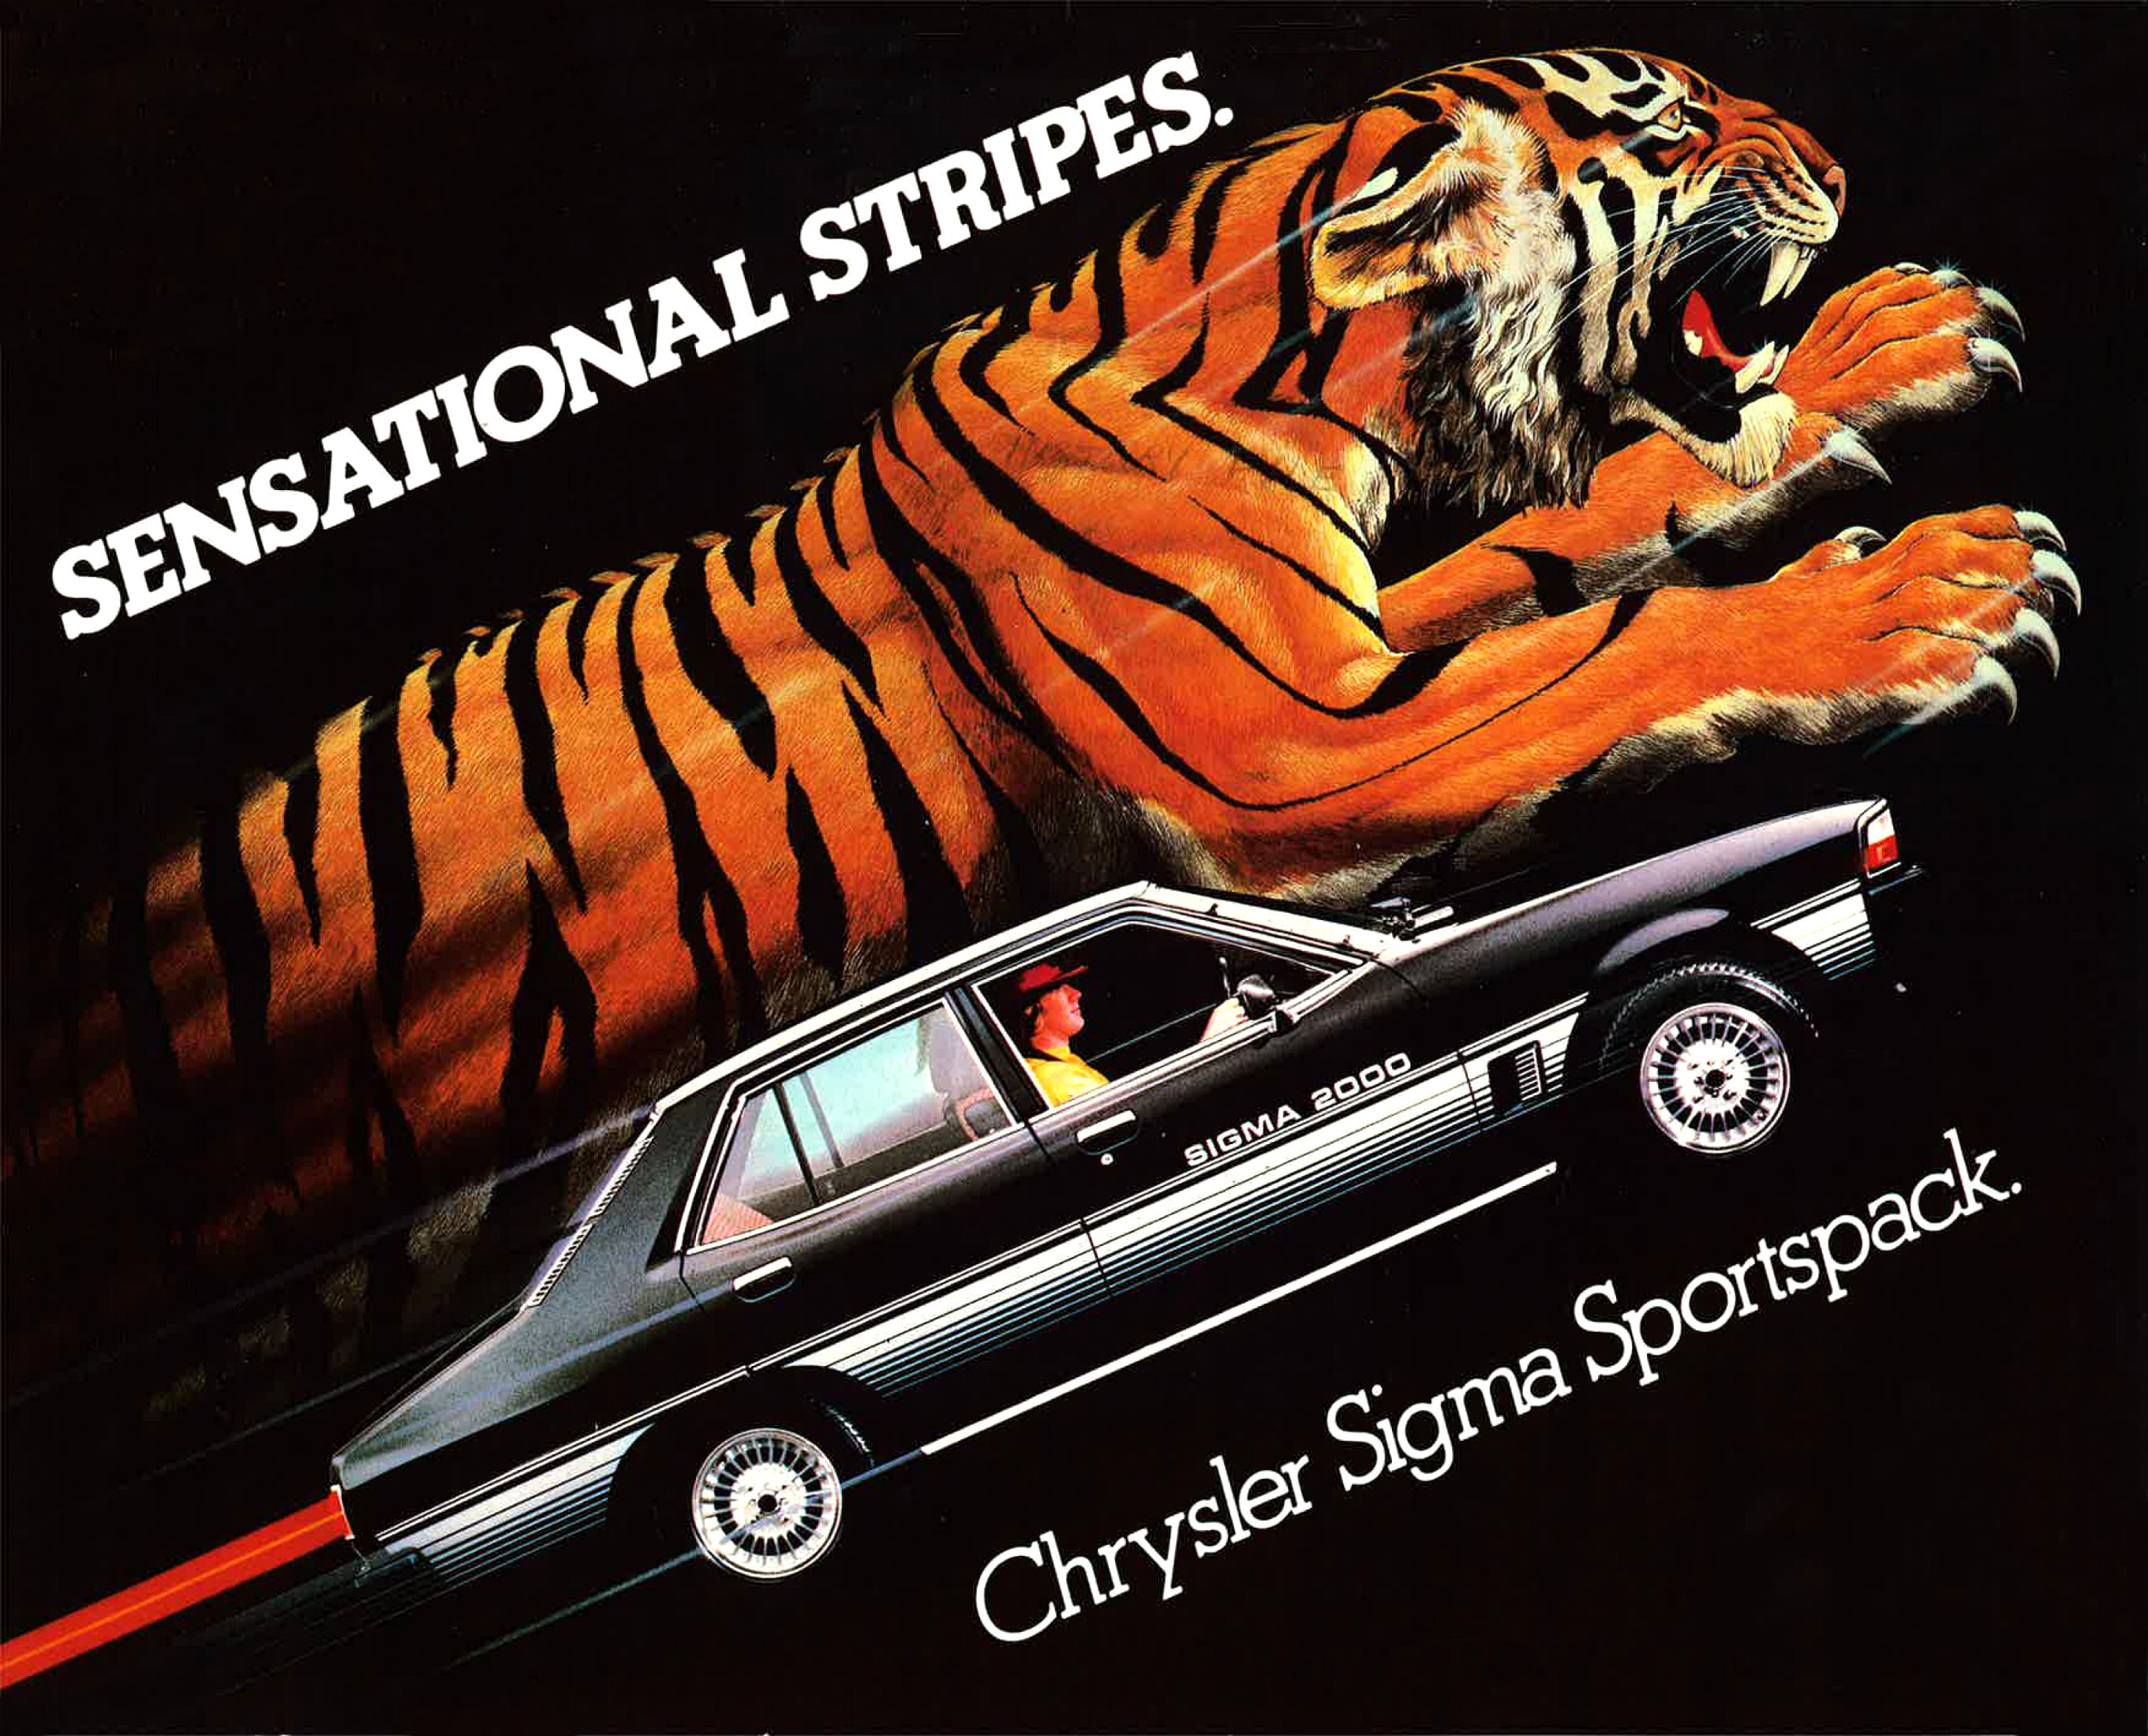 1979 Chrysler GE Sigma Sportpack-01